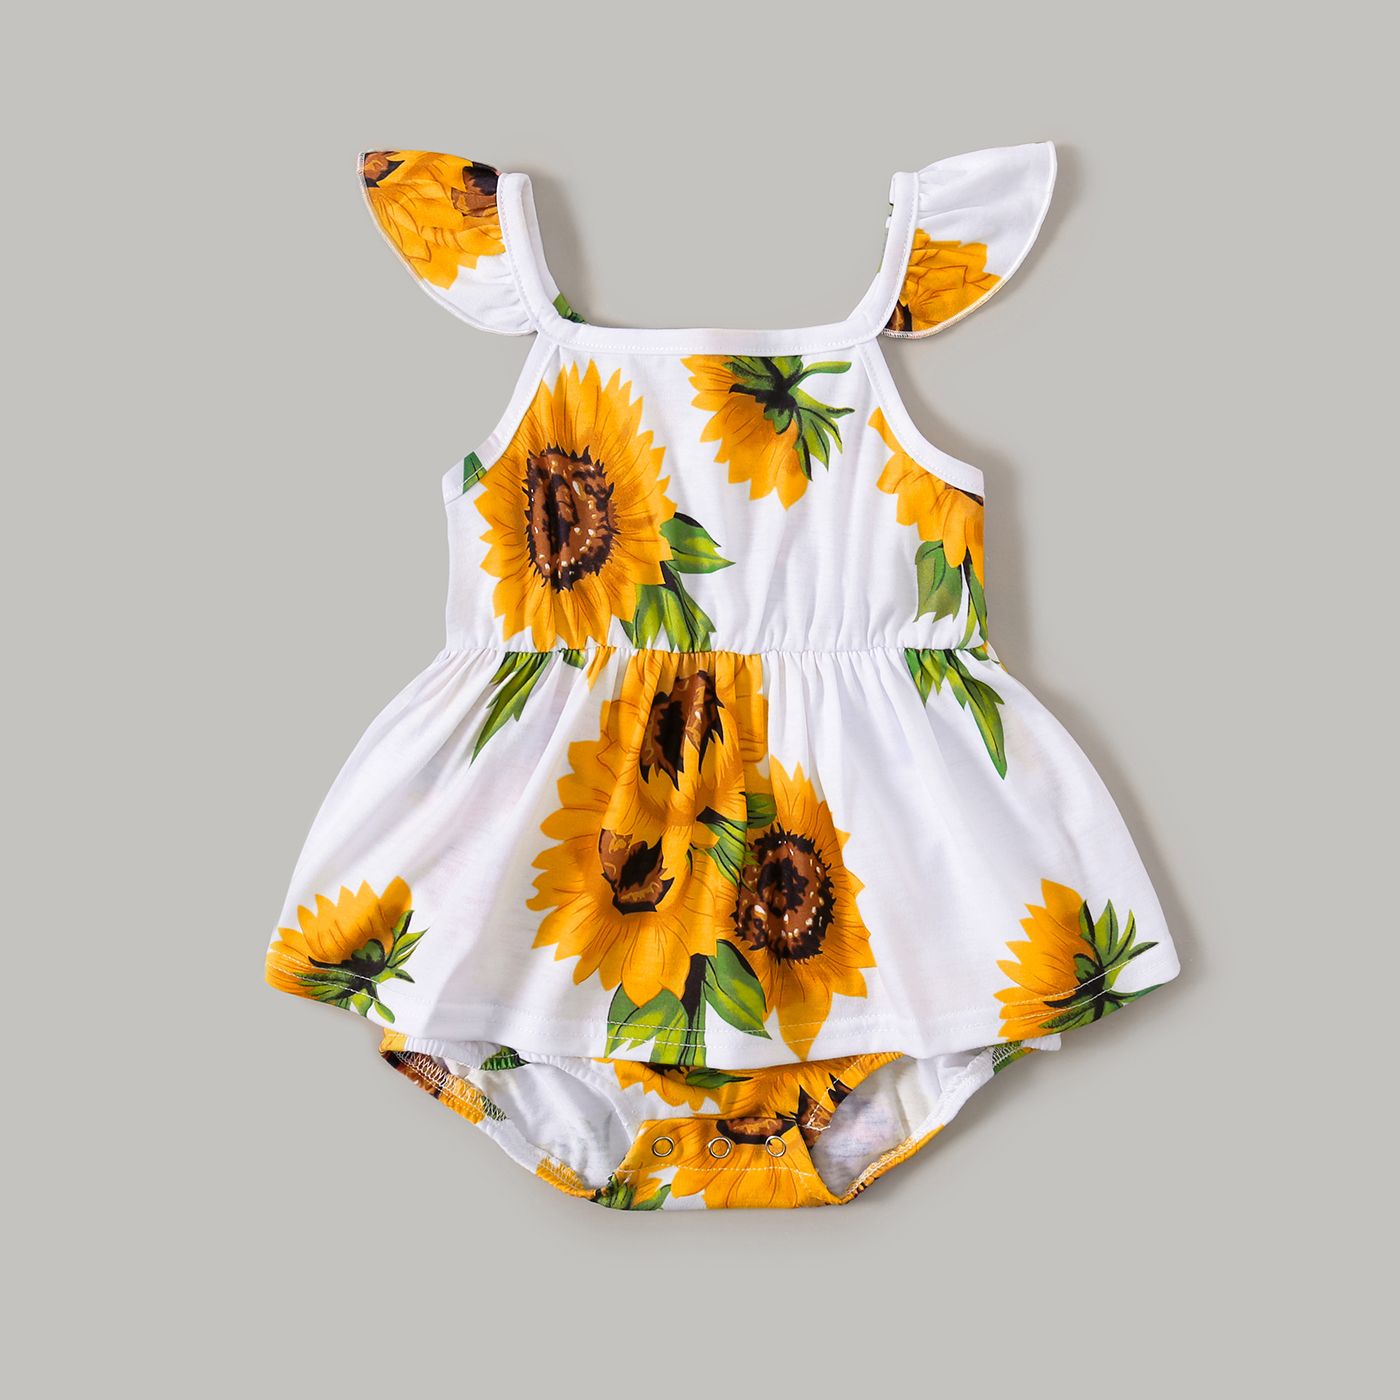 Baby Girl Spaghetti Strap Solid Splicing Sunflower/ Pineapple Print Romper